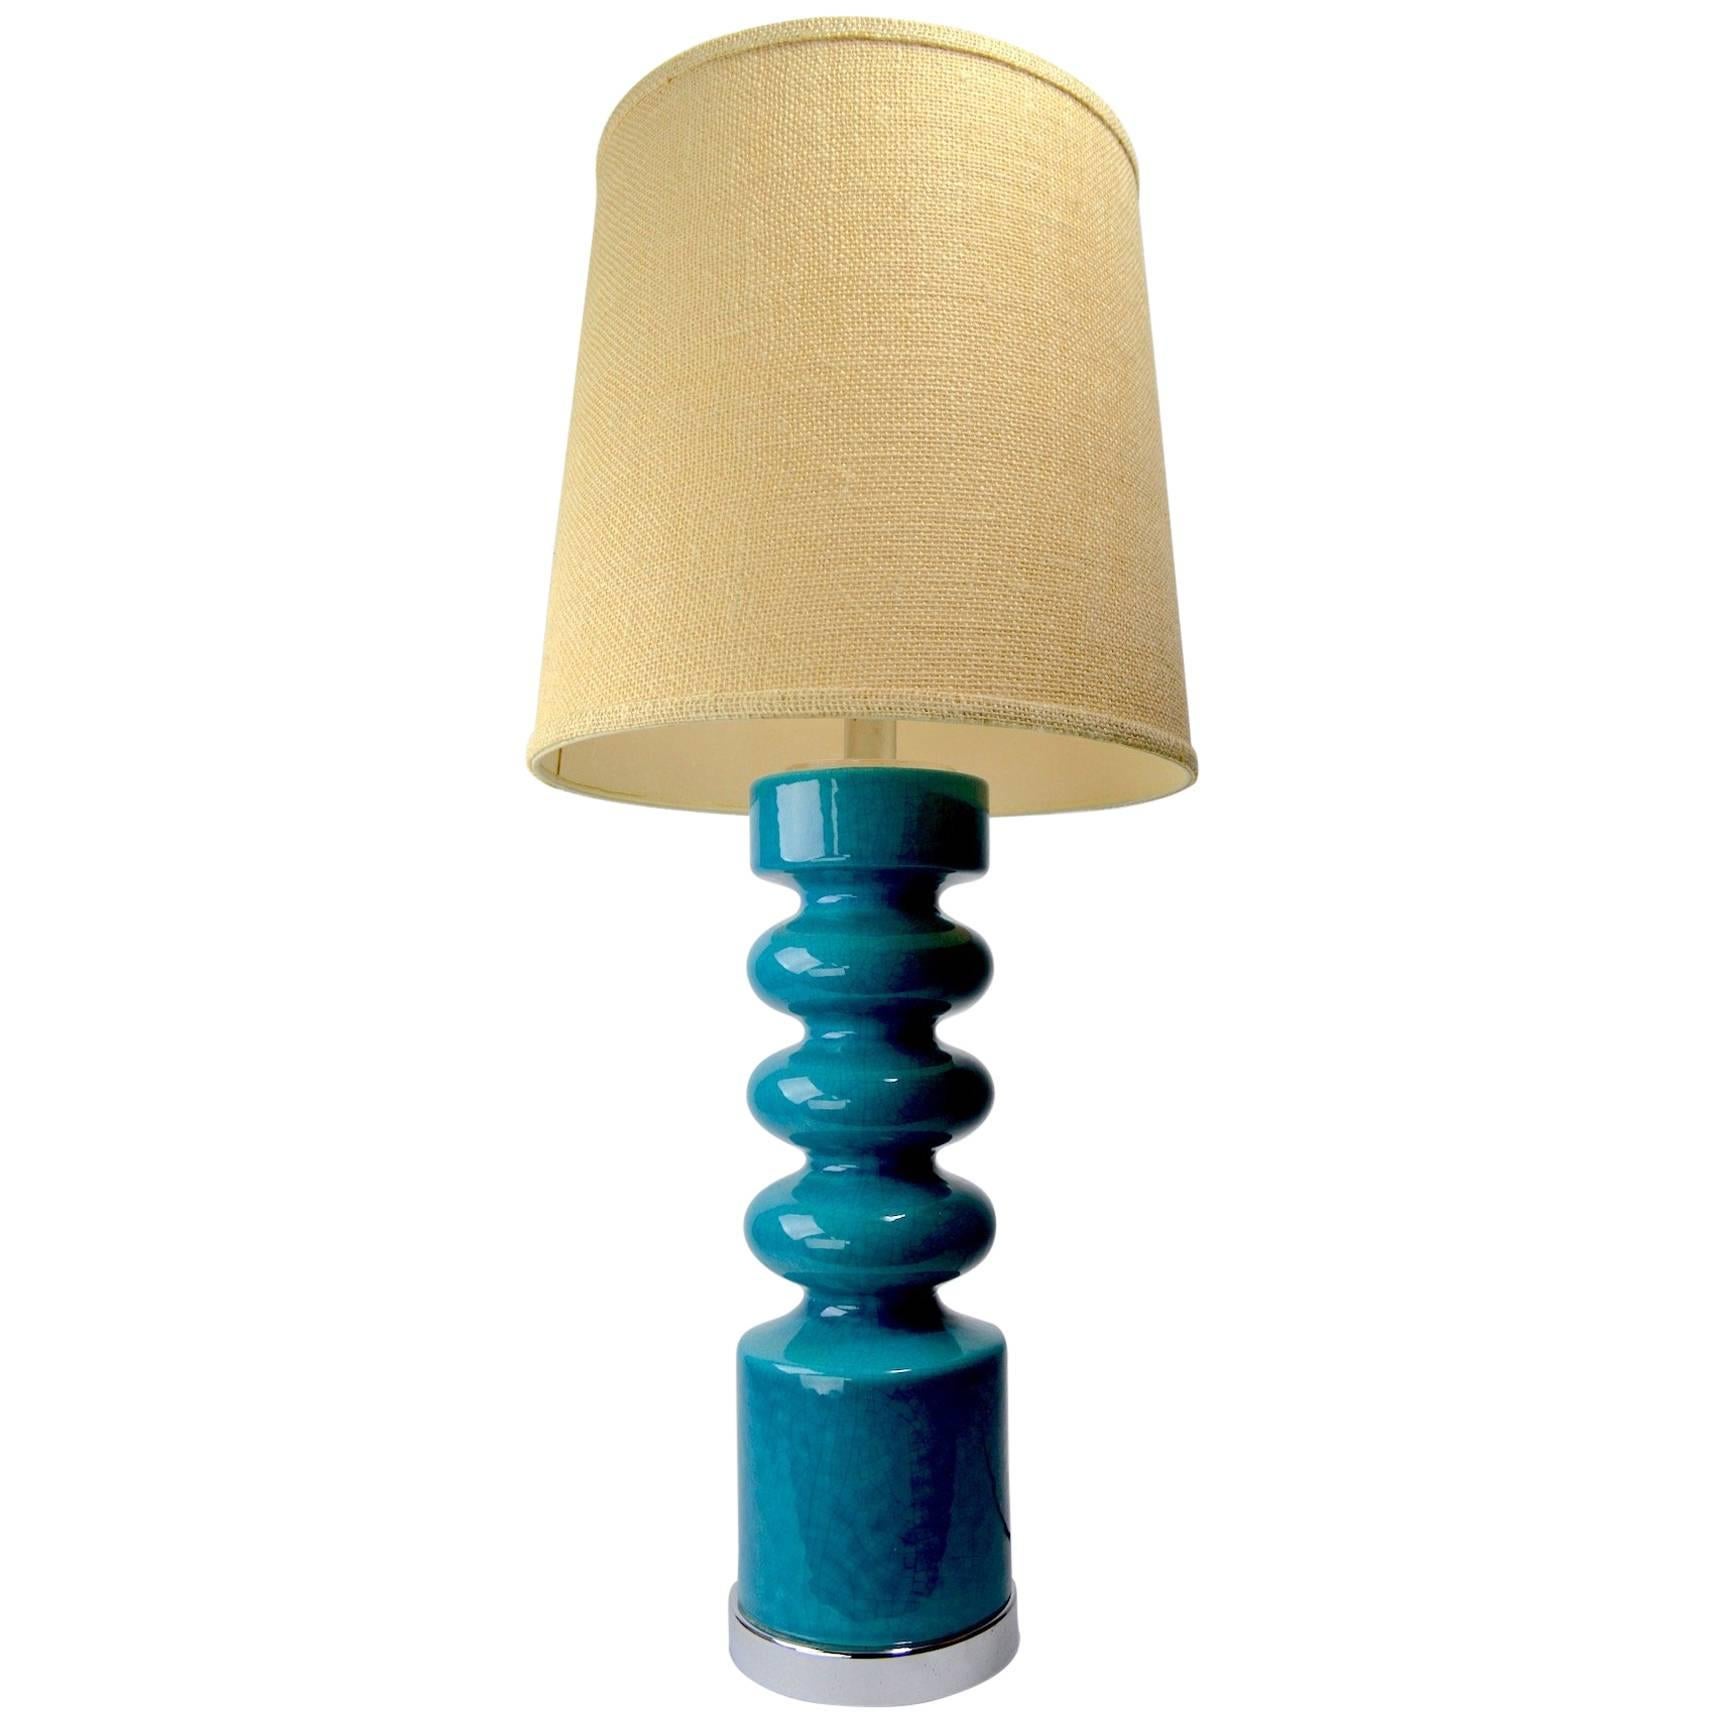 Mod Ceramic Table Lamp